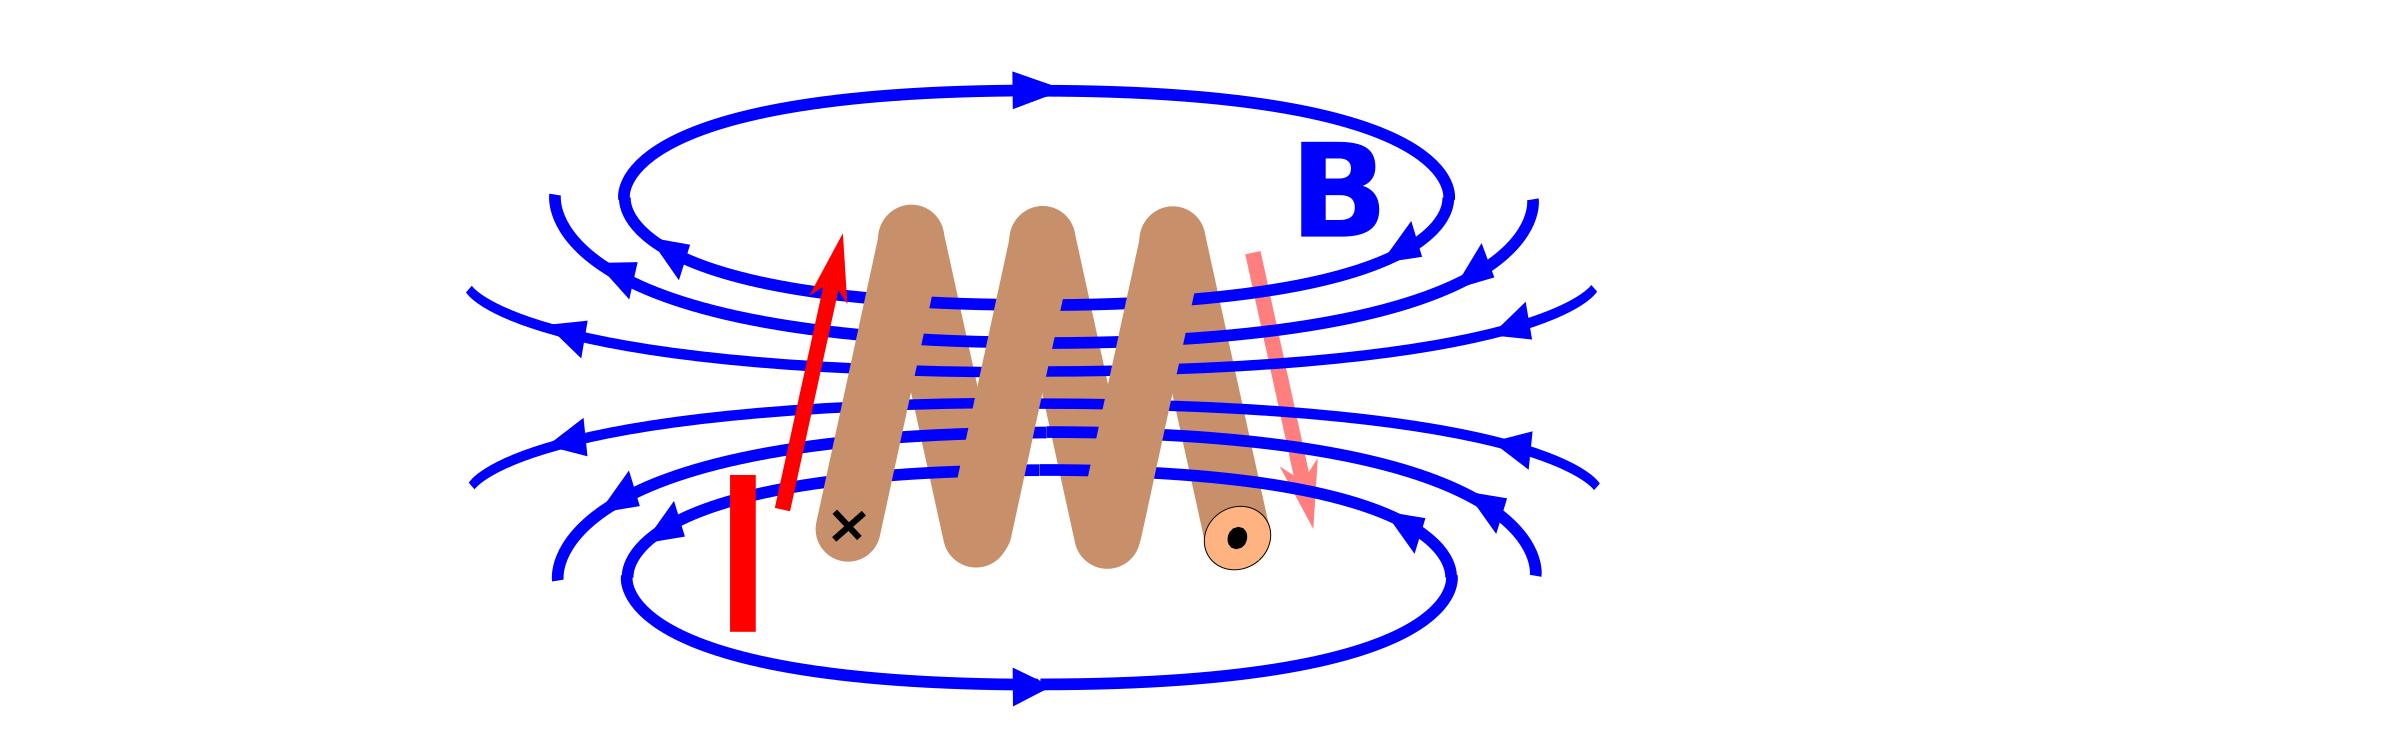 Magnetfeld einer Spule (3 Windungen) png